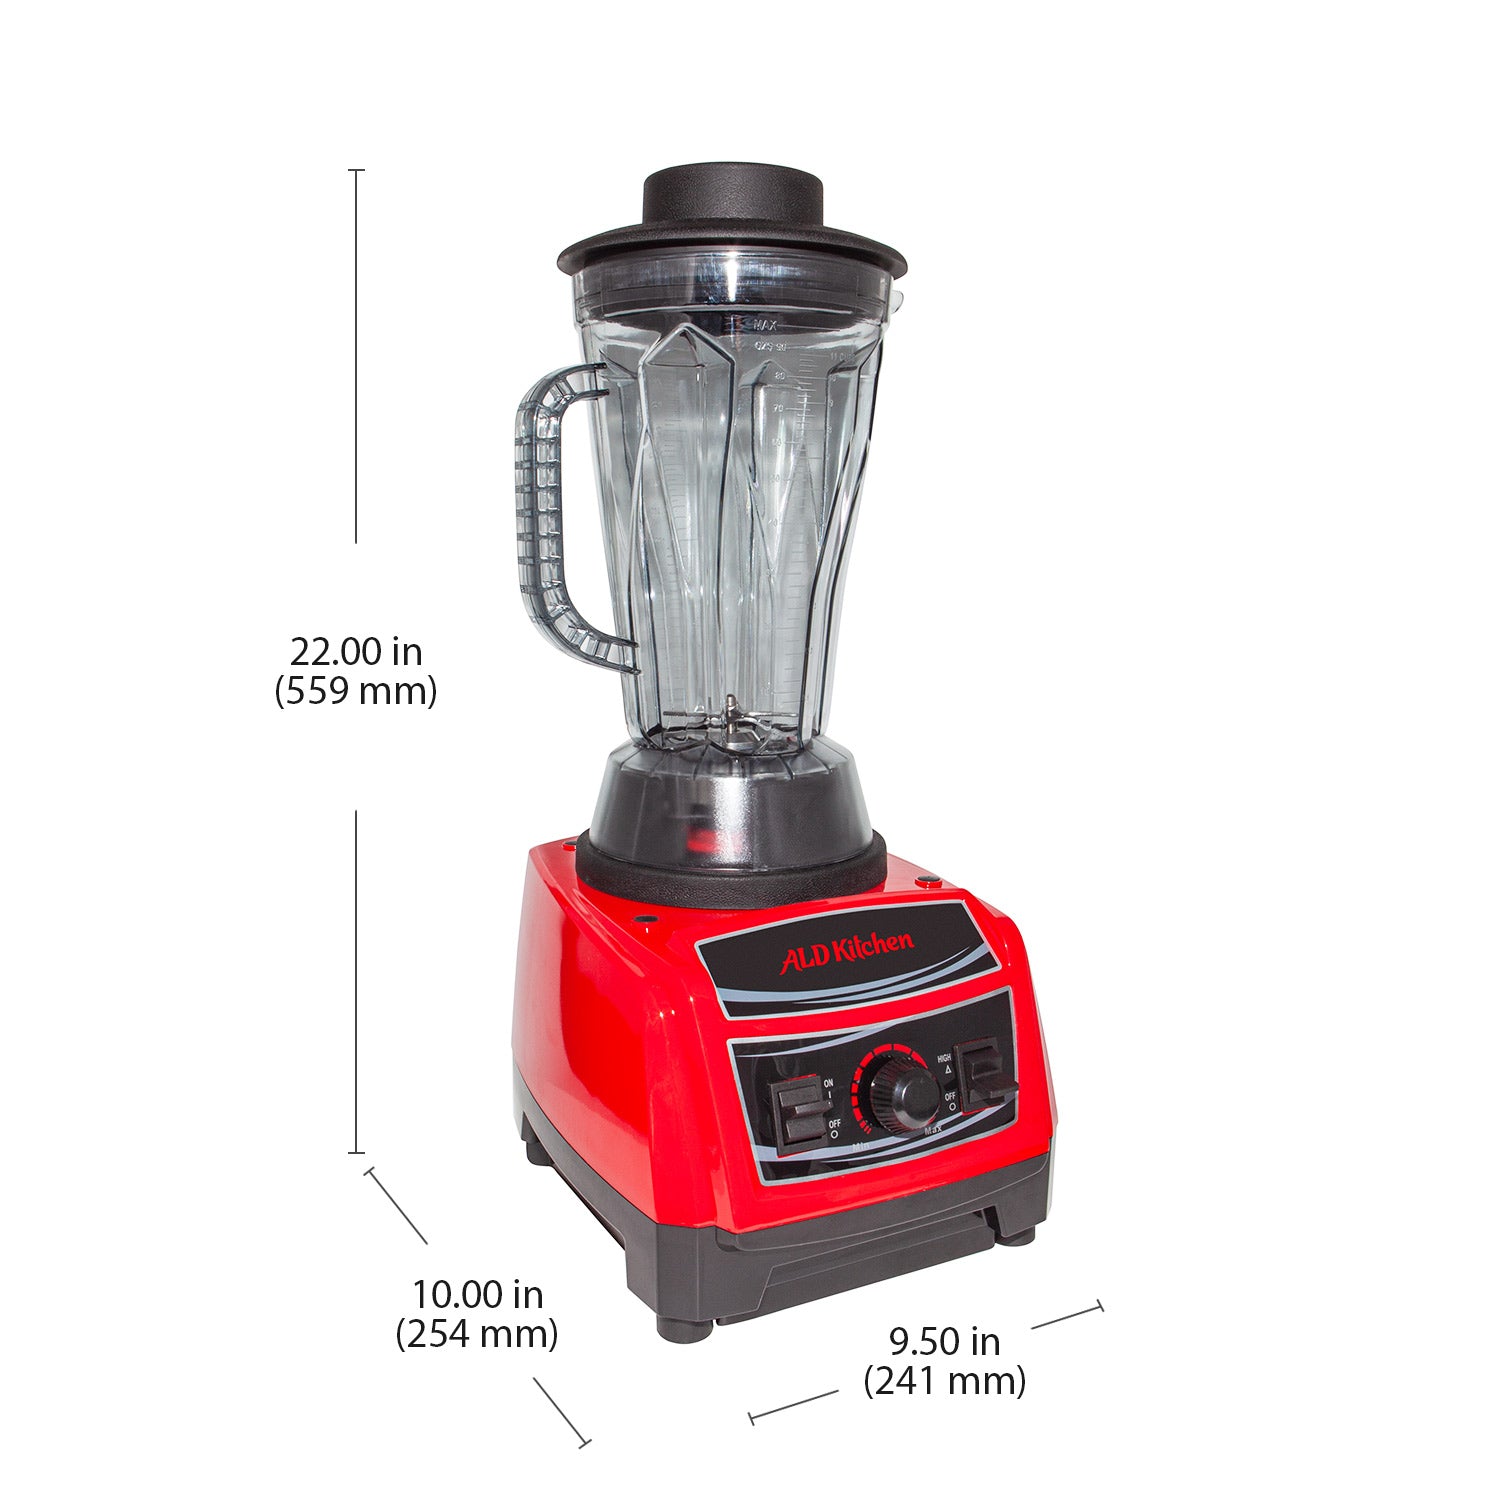 ALDKitchen Electric Milk Tea Shaker | Double Cup Drink Mixer | Stainless  Steel | 110V